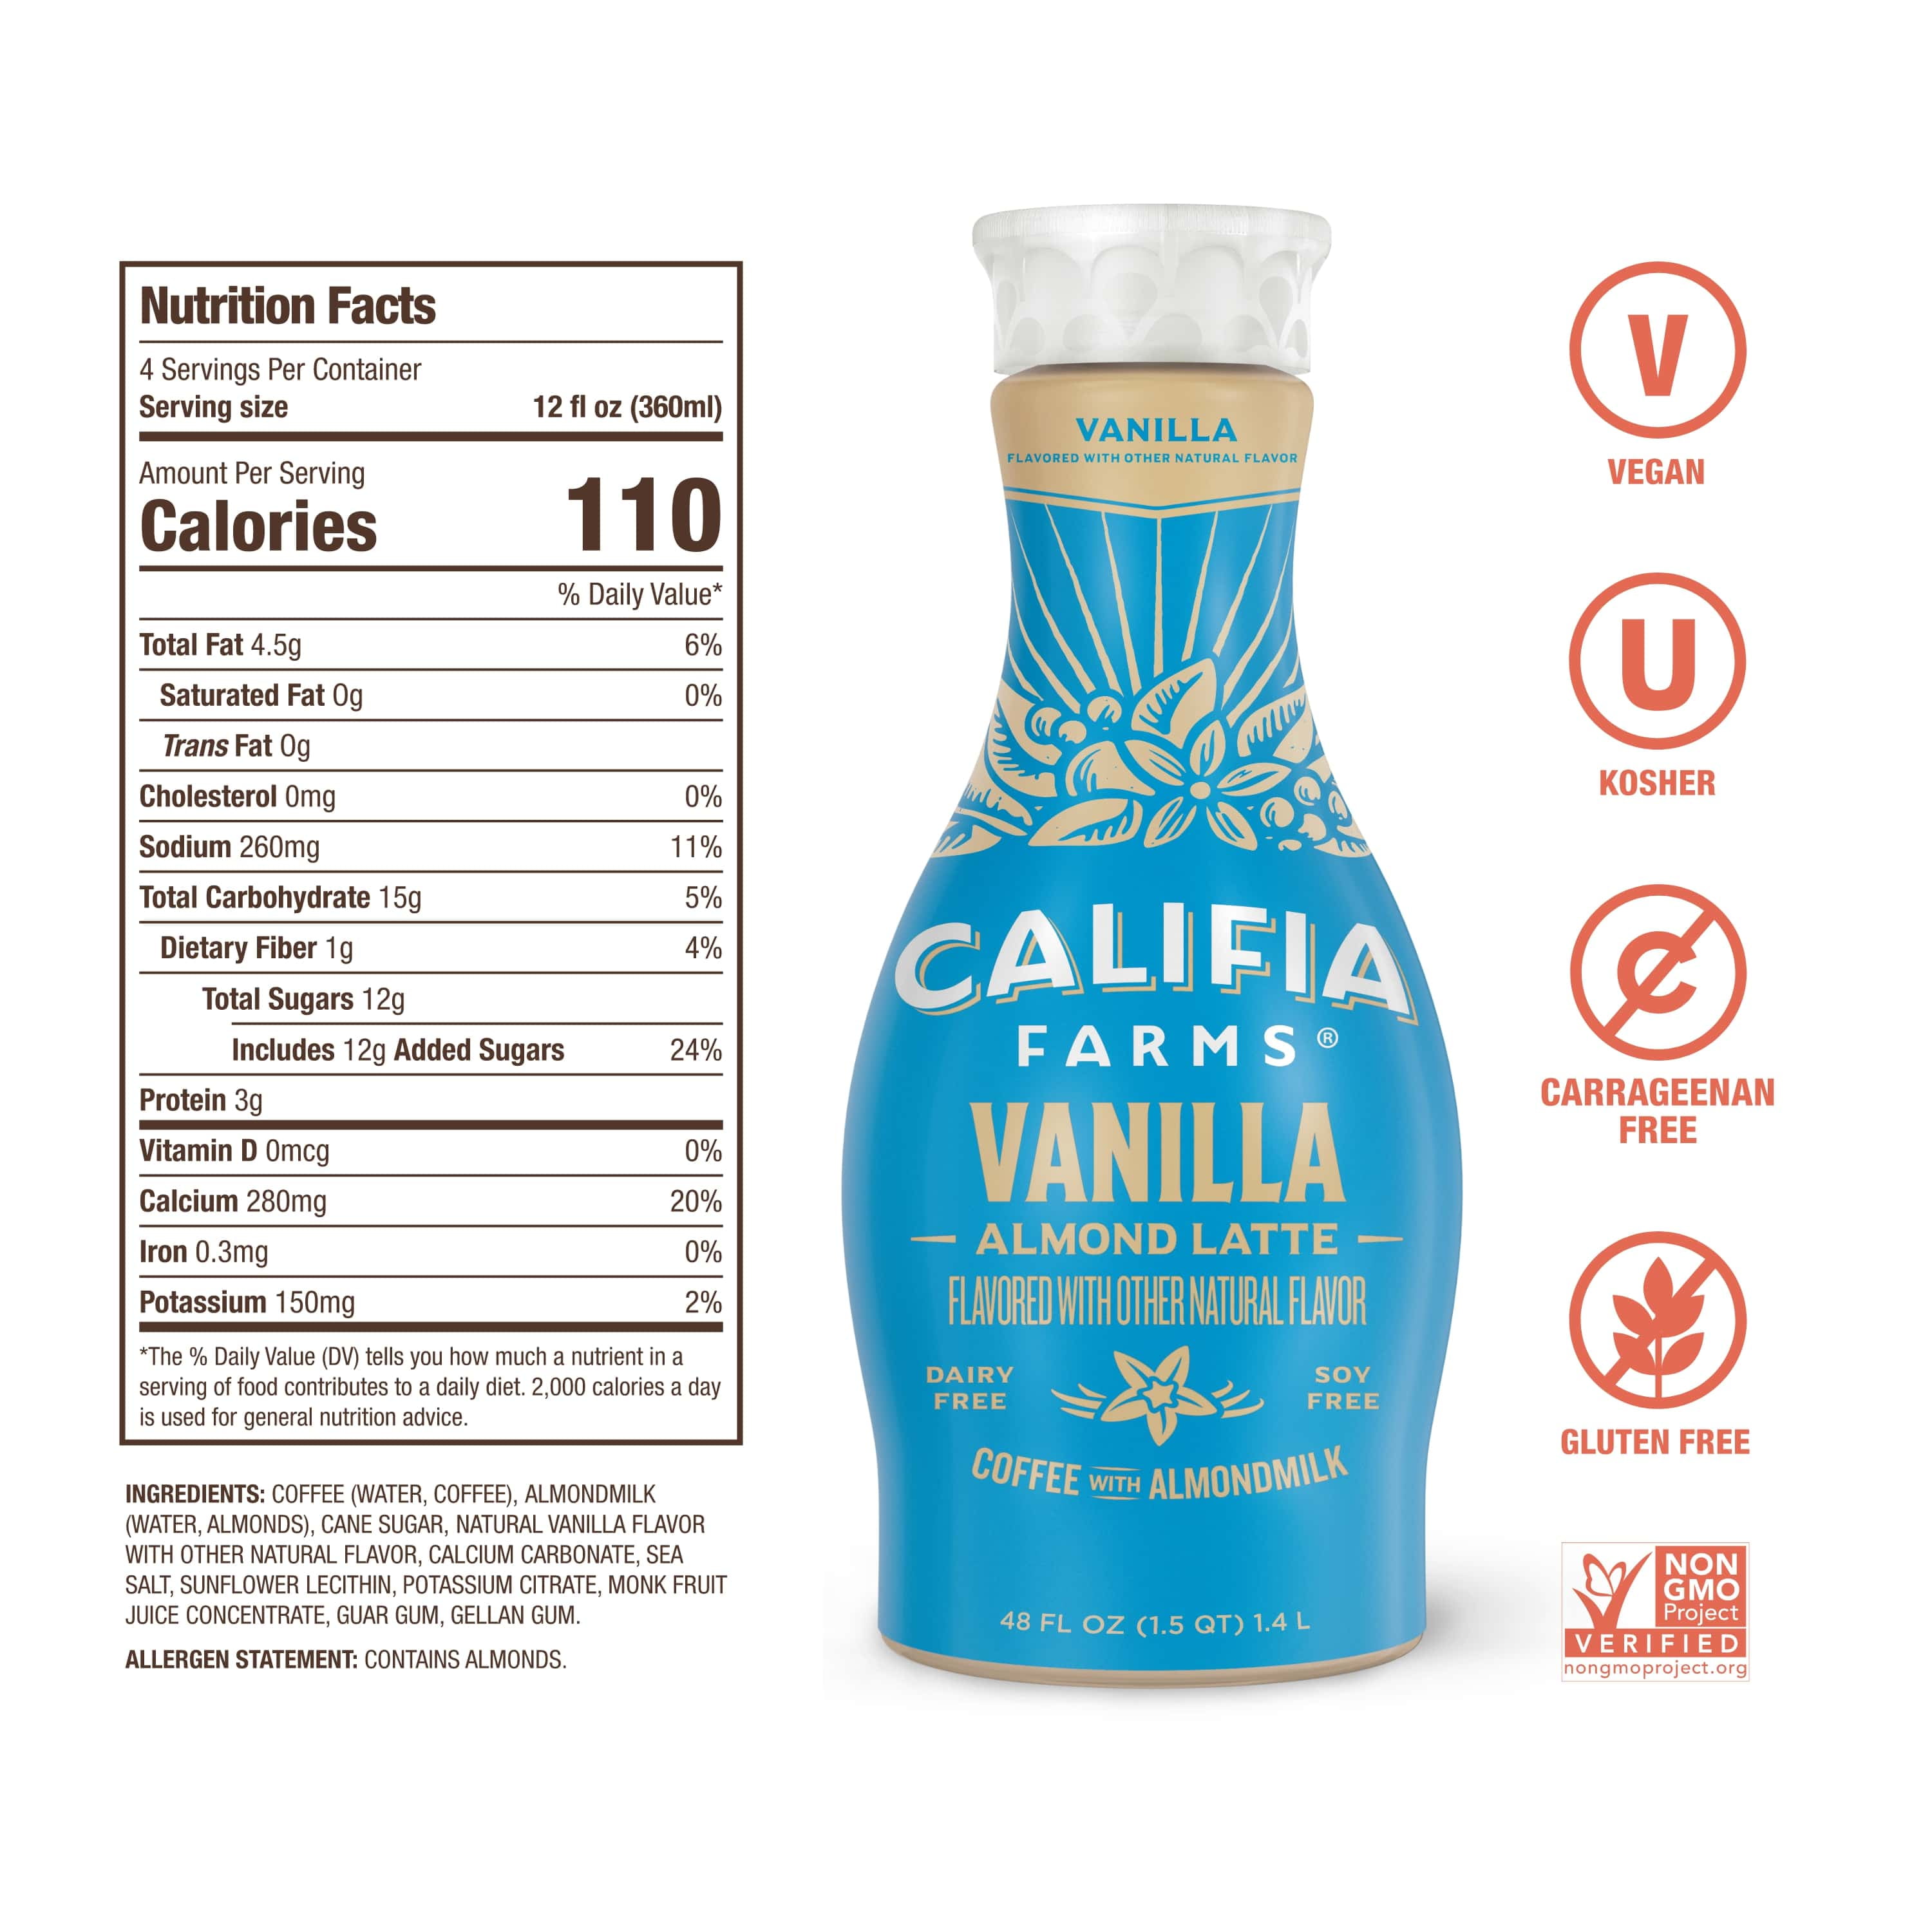 Califia Farms Iced Café Mixers, Vanilla Sweet Crème